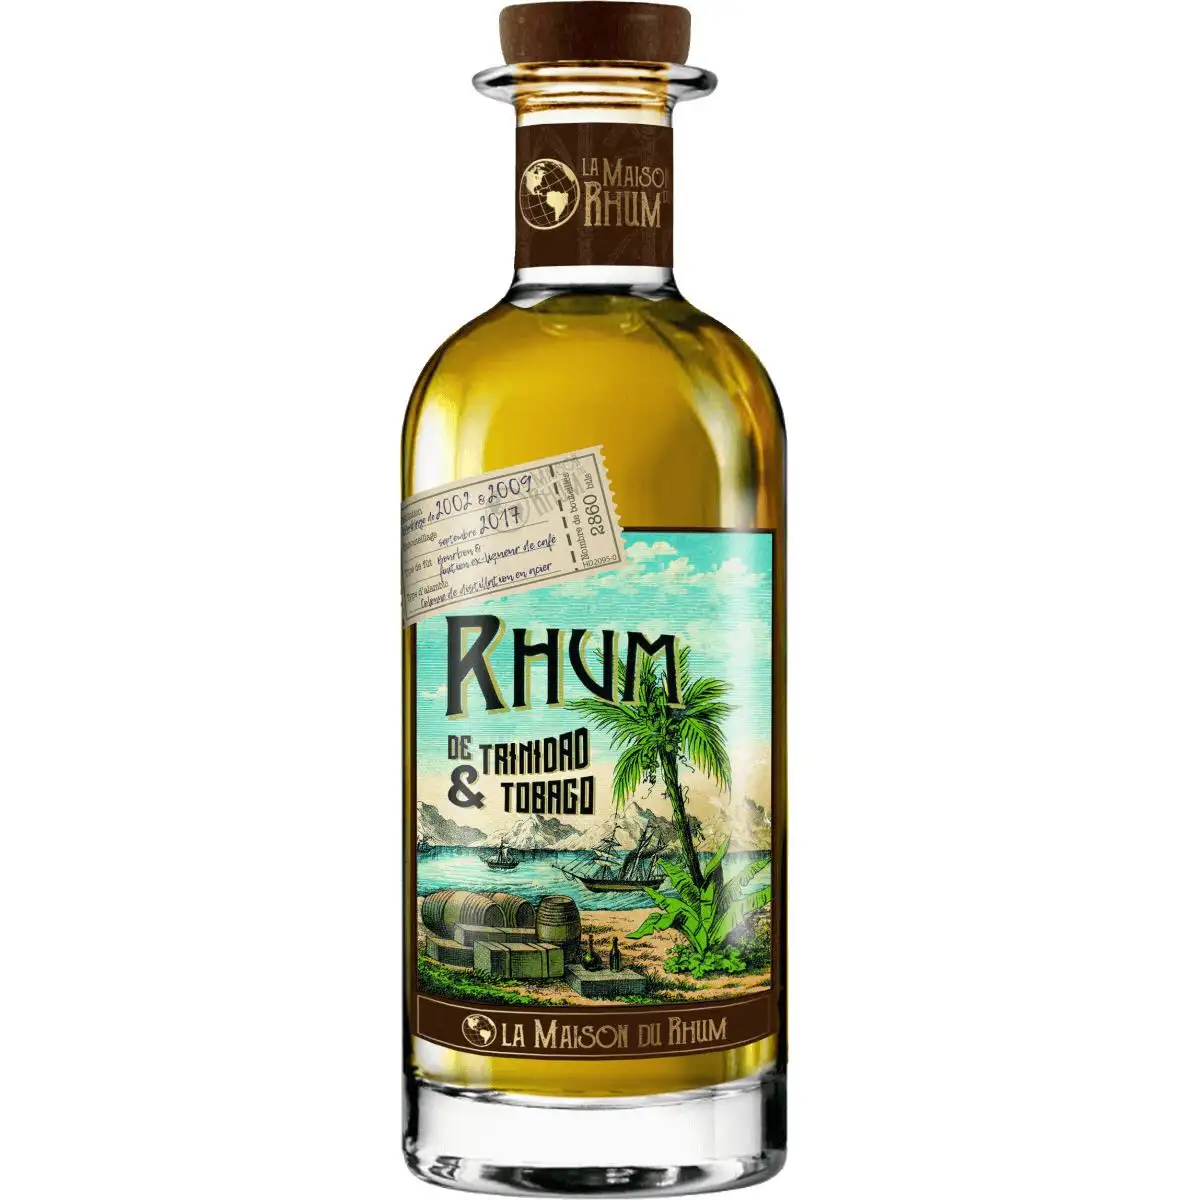 Image of the front of the bottle of the rum La Maison du Rhum Trinidad & Tobago